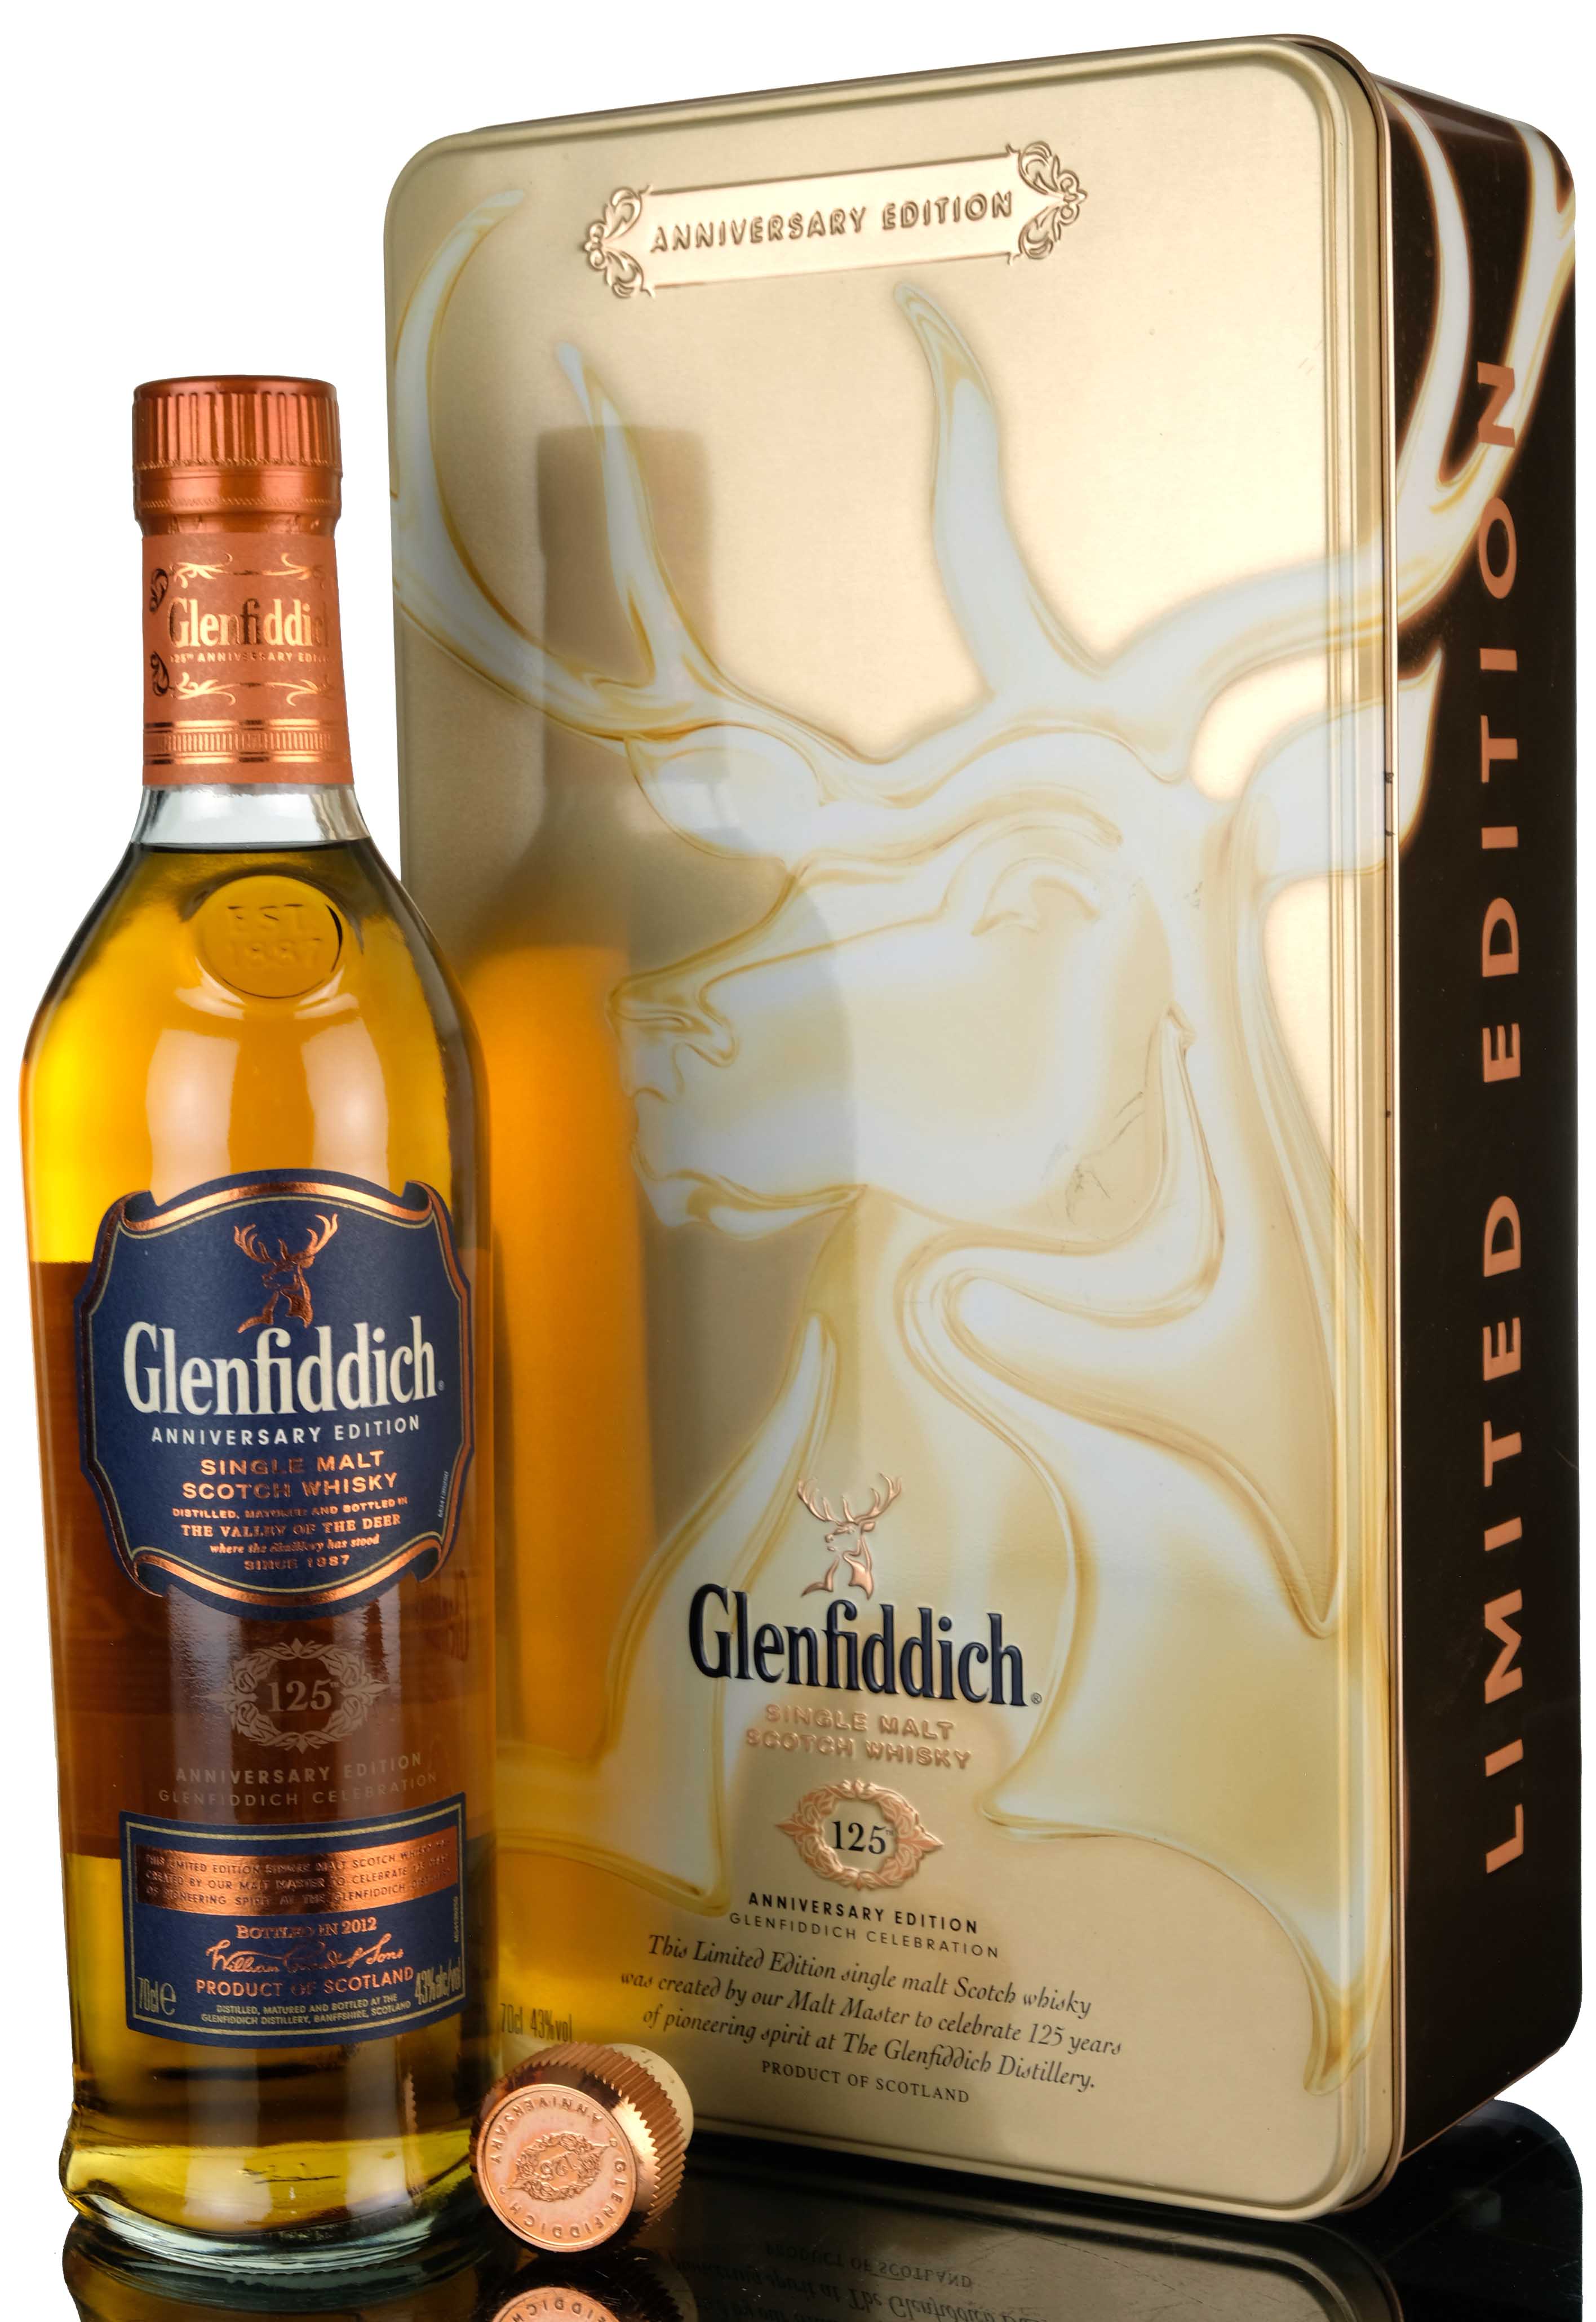 Glenfiddich 125th Anniversary